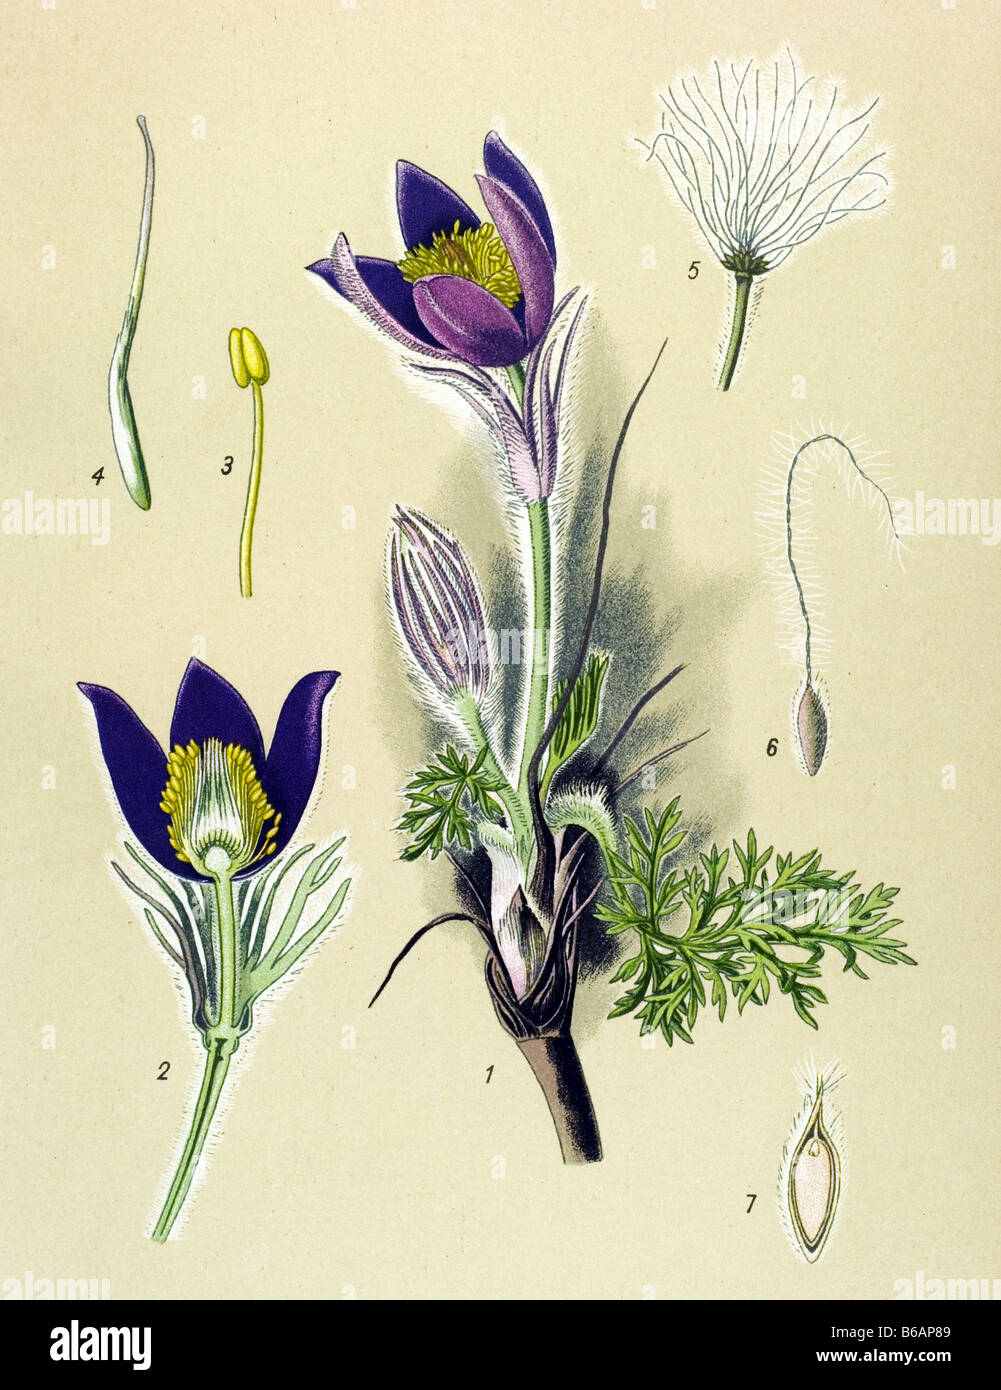 Pasque Flower, Pulsatilla vulgaris, poisonous plants illustrations Stock Photo